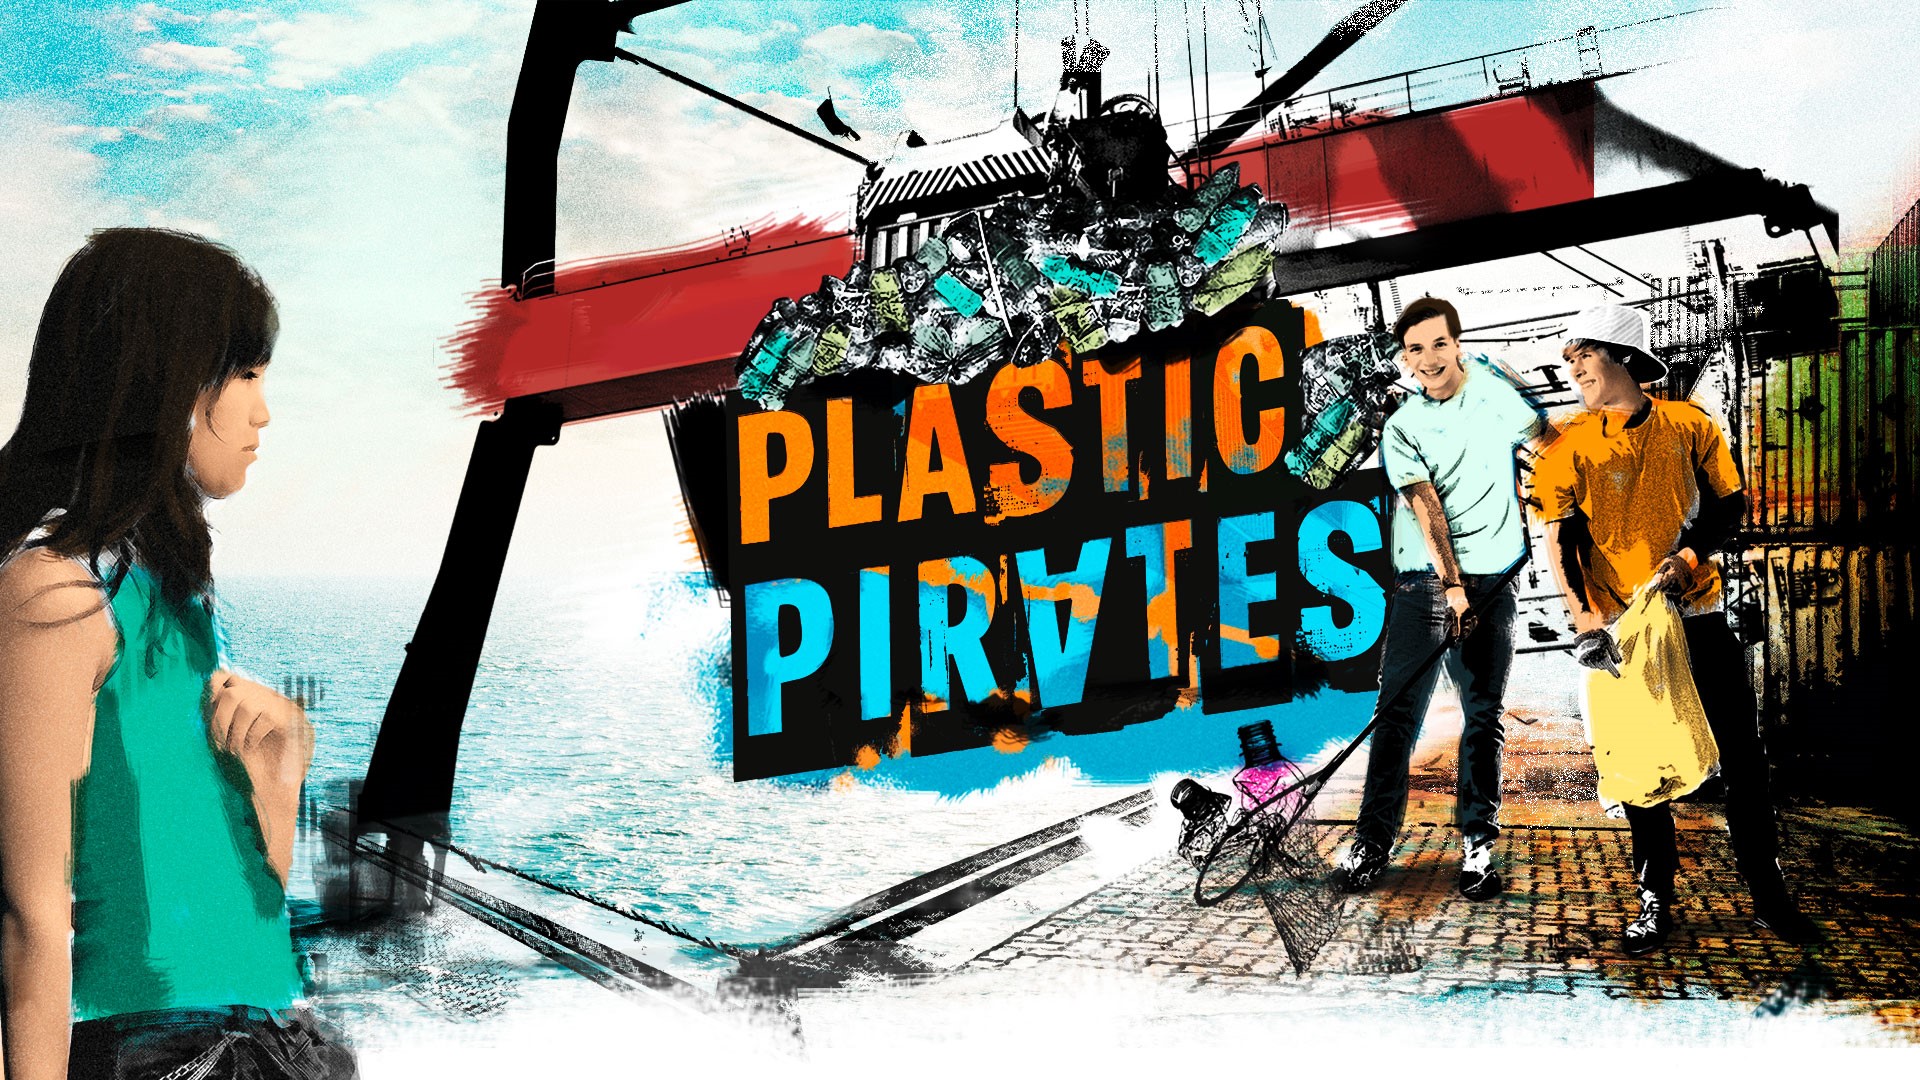 Plastic Pirates – The Sea Starts Here!